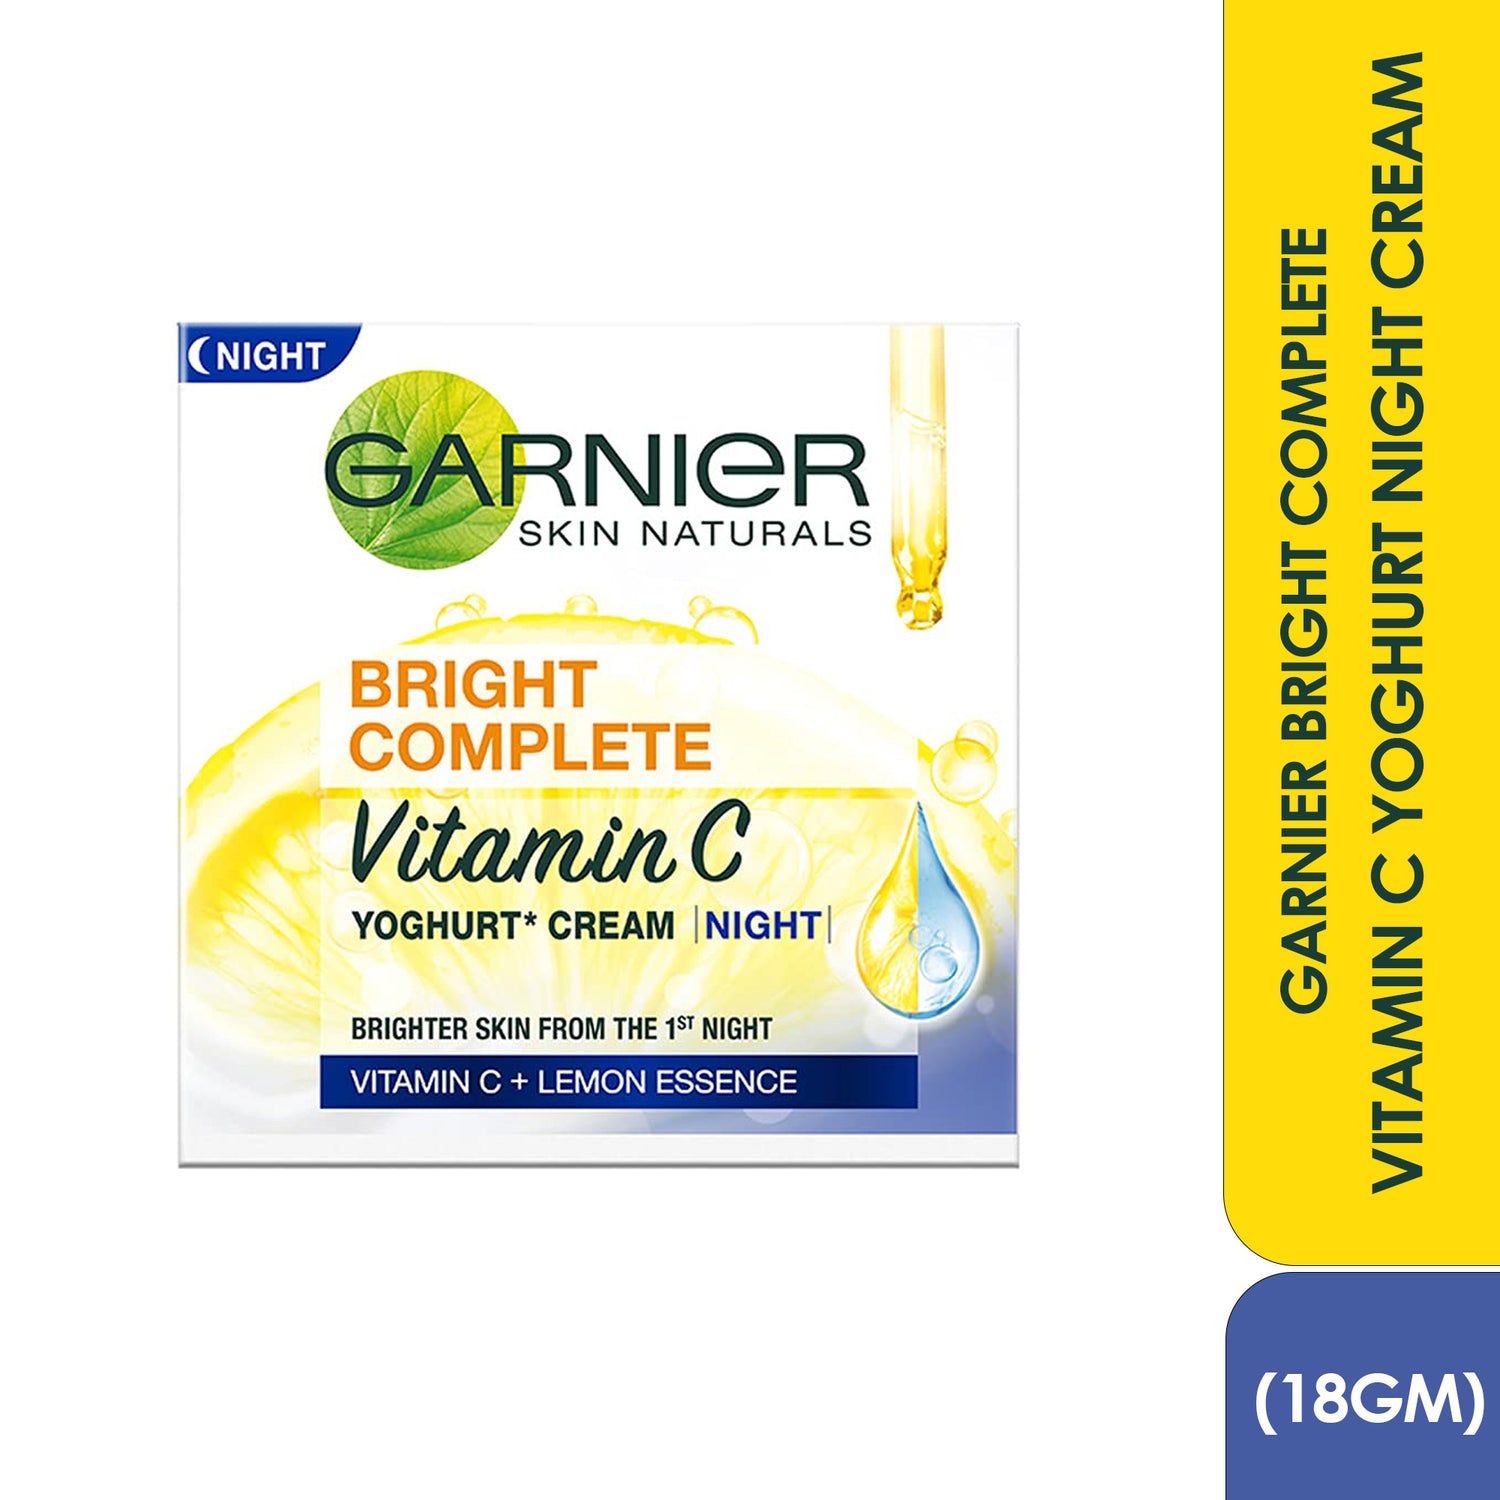 Garnier Bright Complete Vitamin C Yoghurt Night Cream